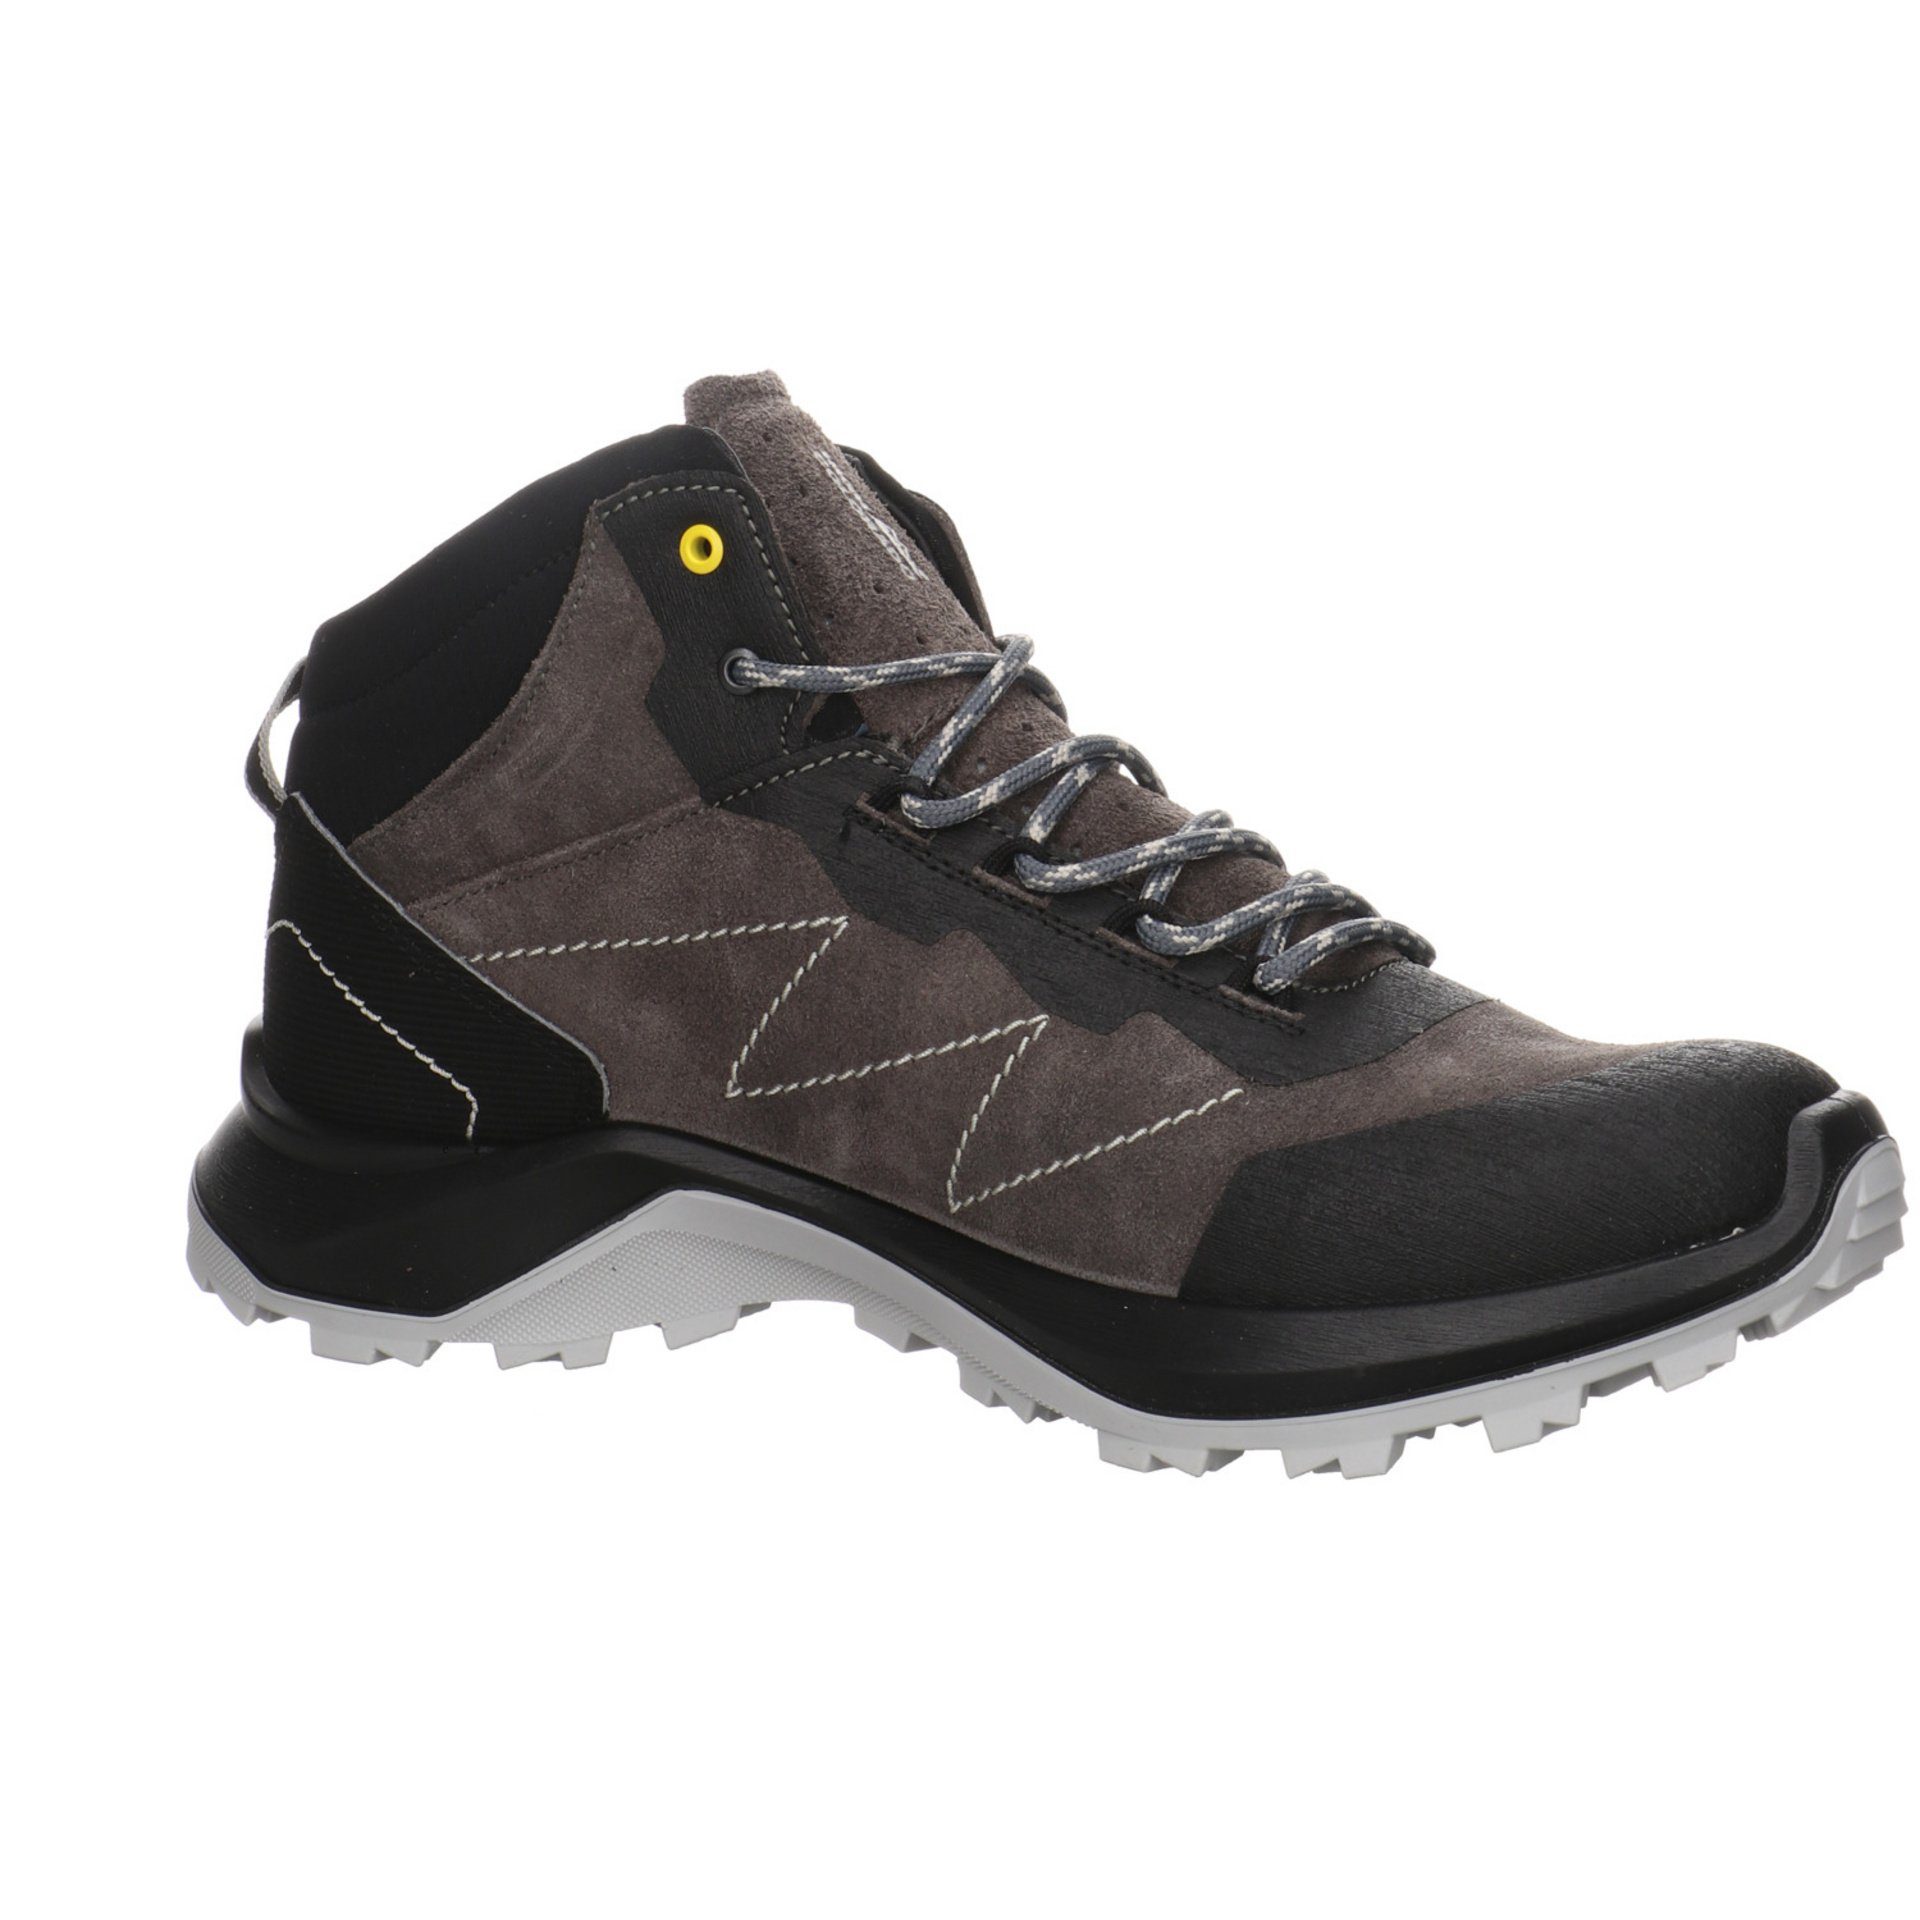 Outdoorschuh Evo Schuhe Colorado Outdoor Herren Outdoorschuh Leder-/Textilkombination Mid High Trail